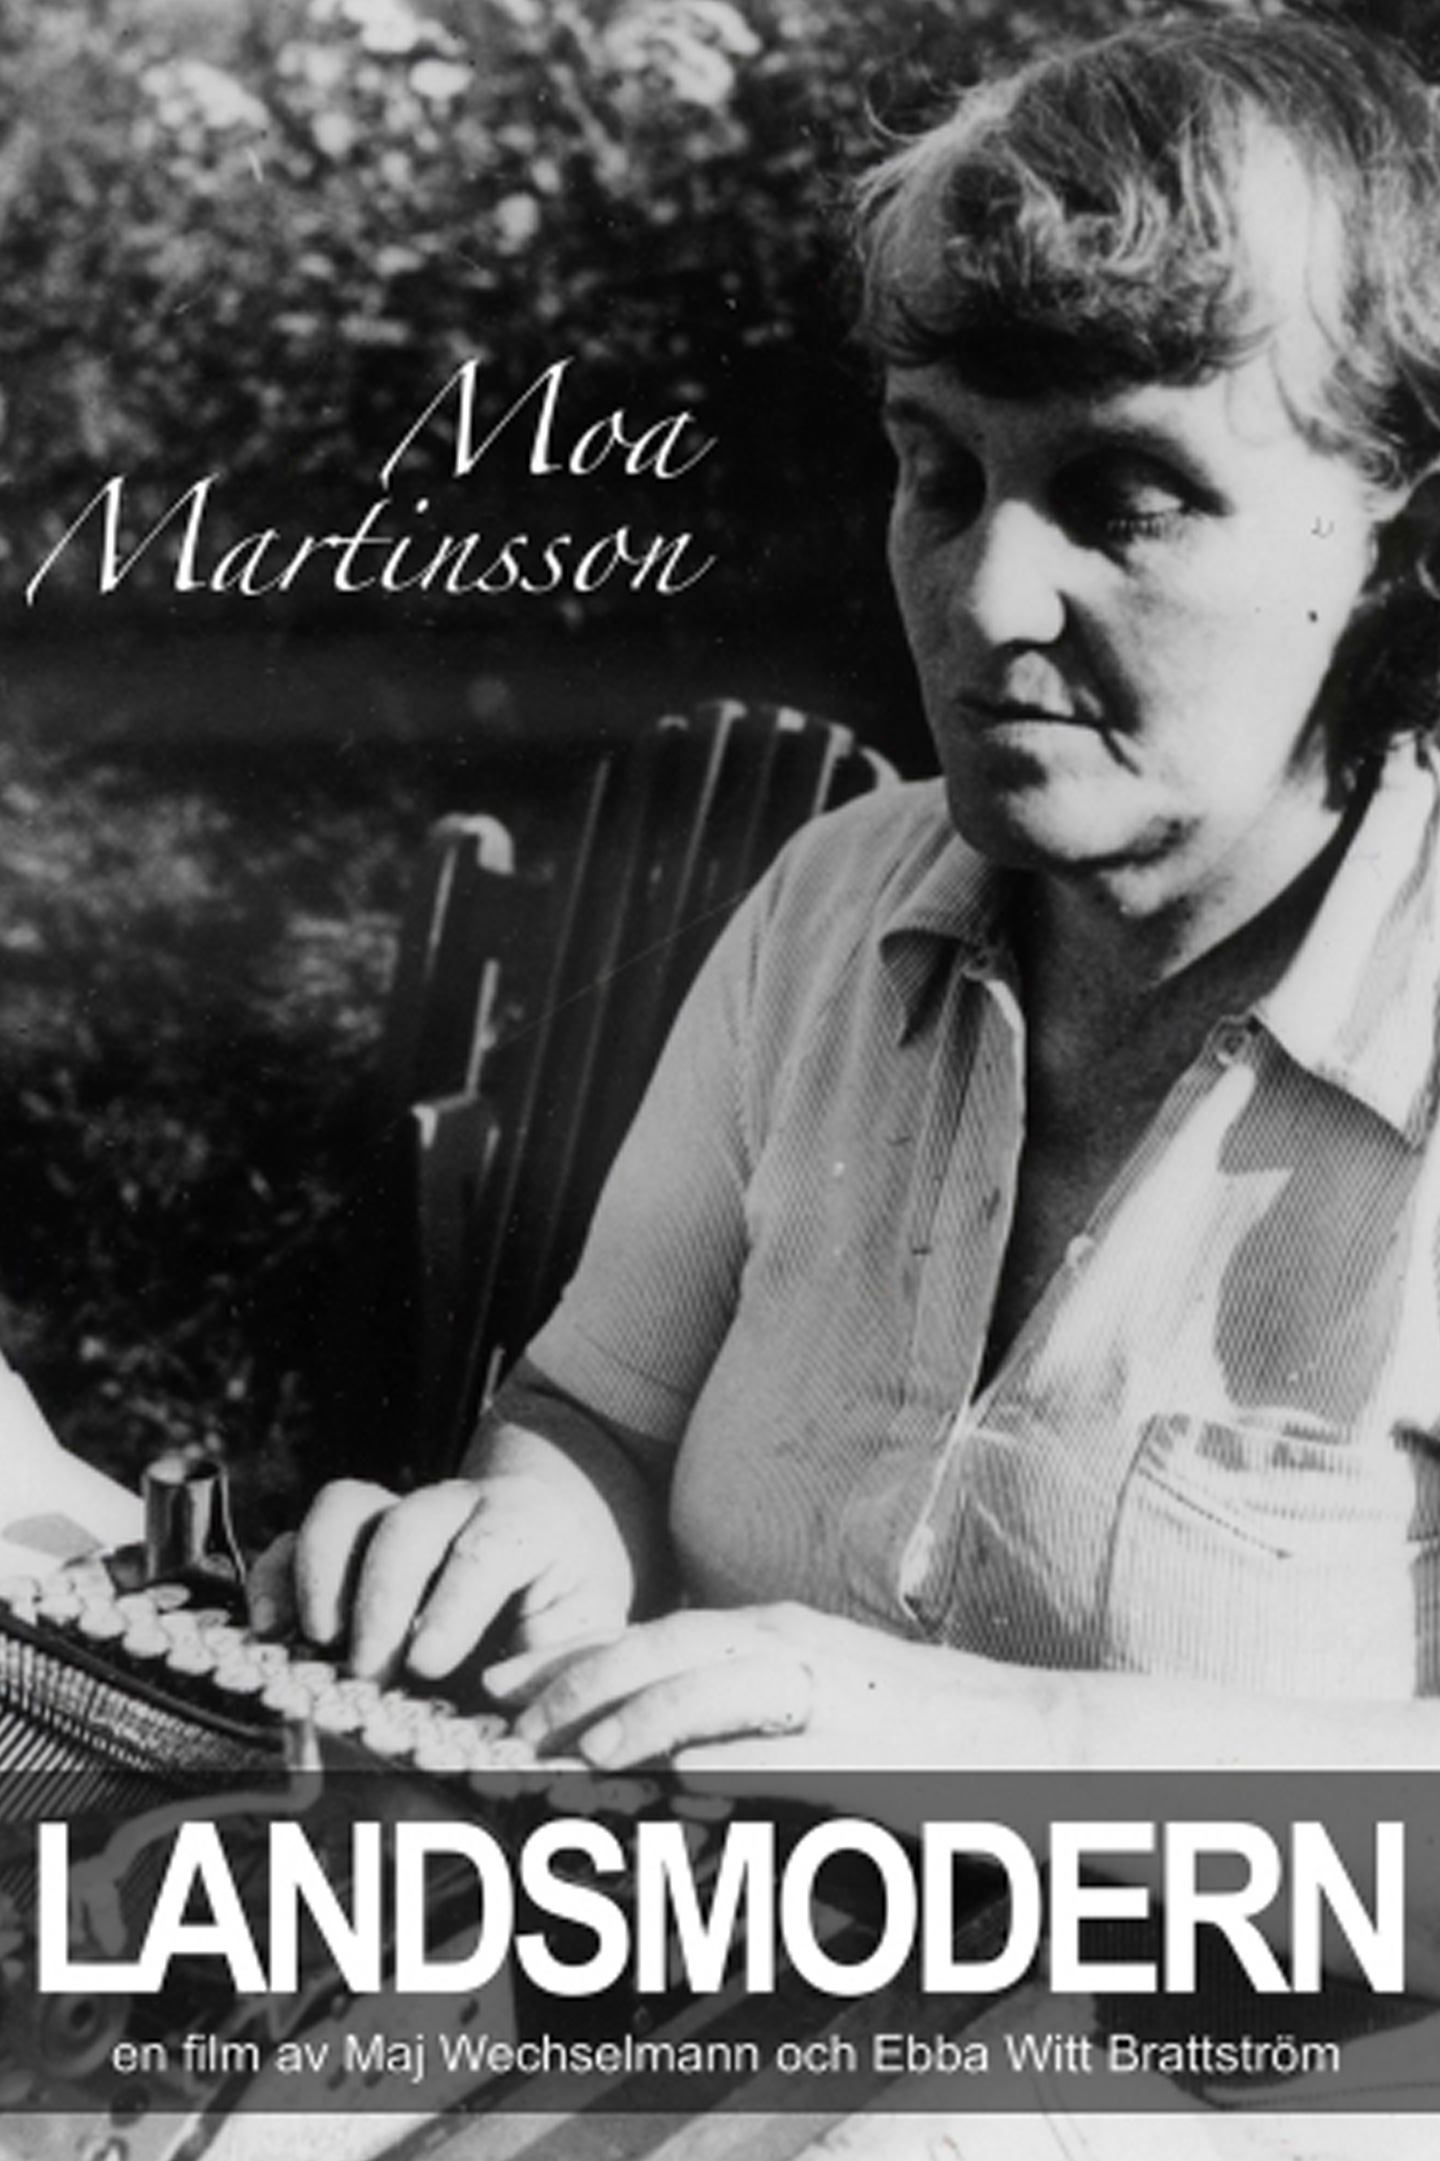 Moa Martinson – Landsmodern